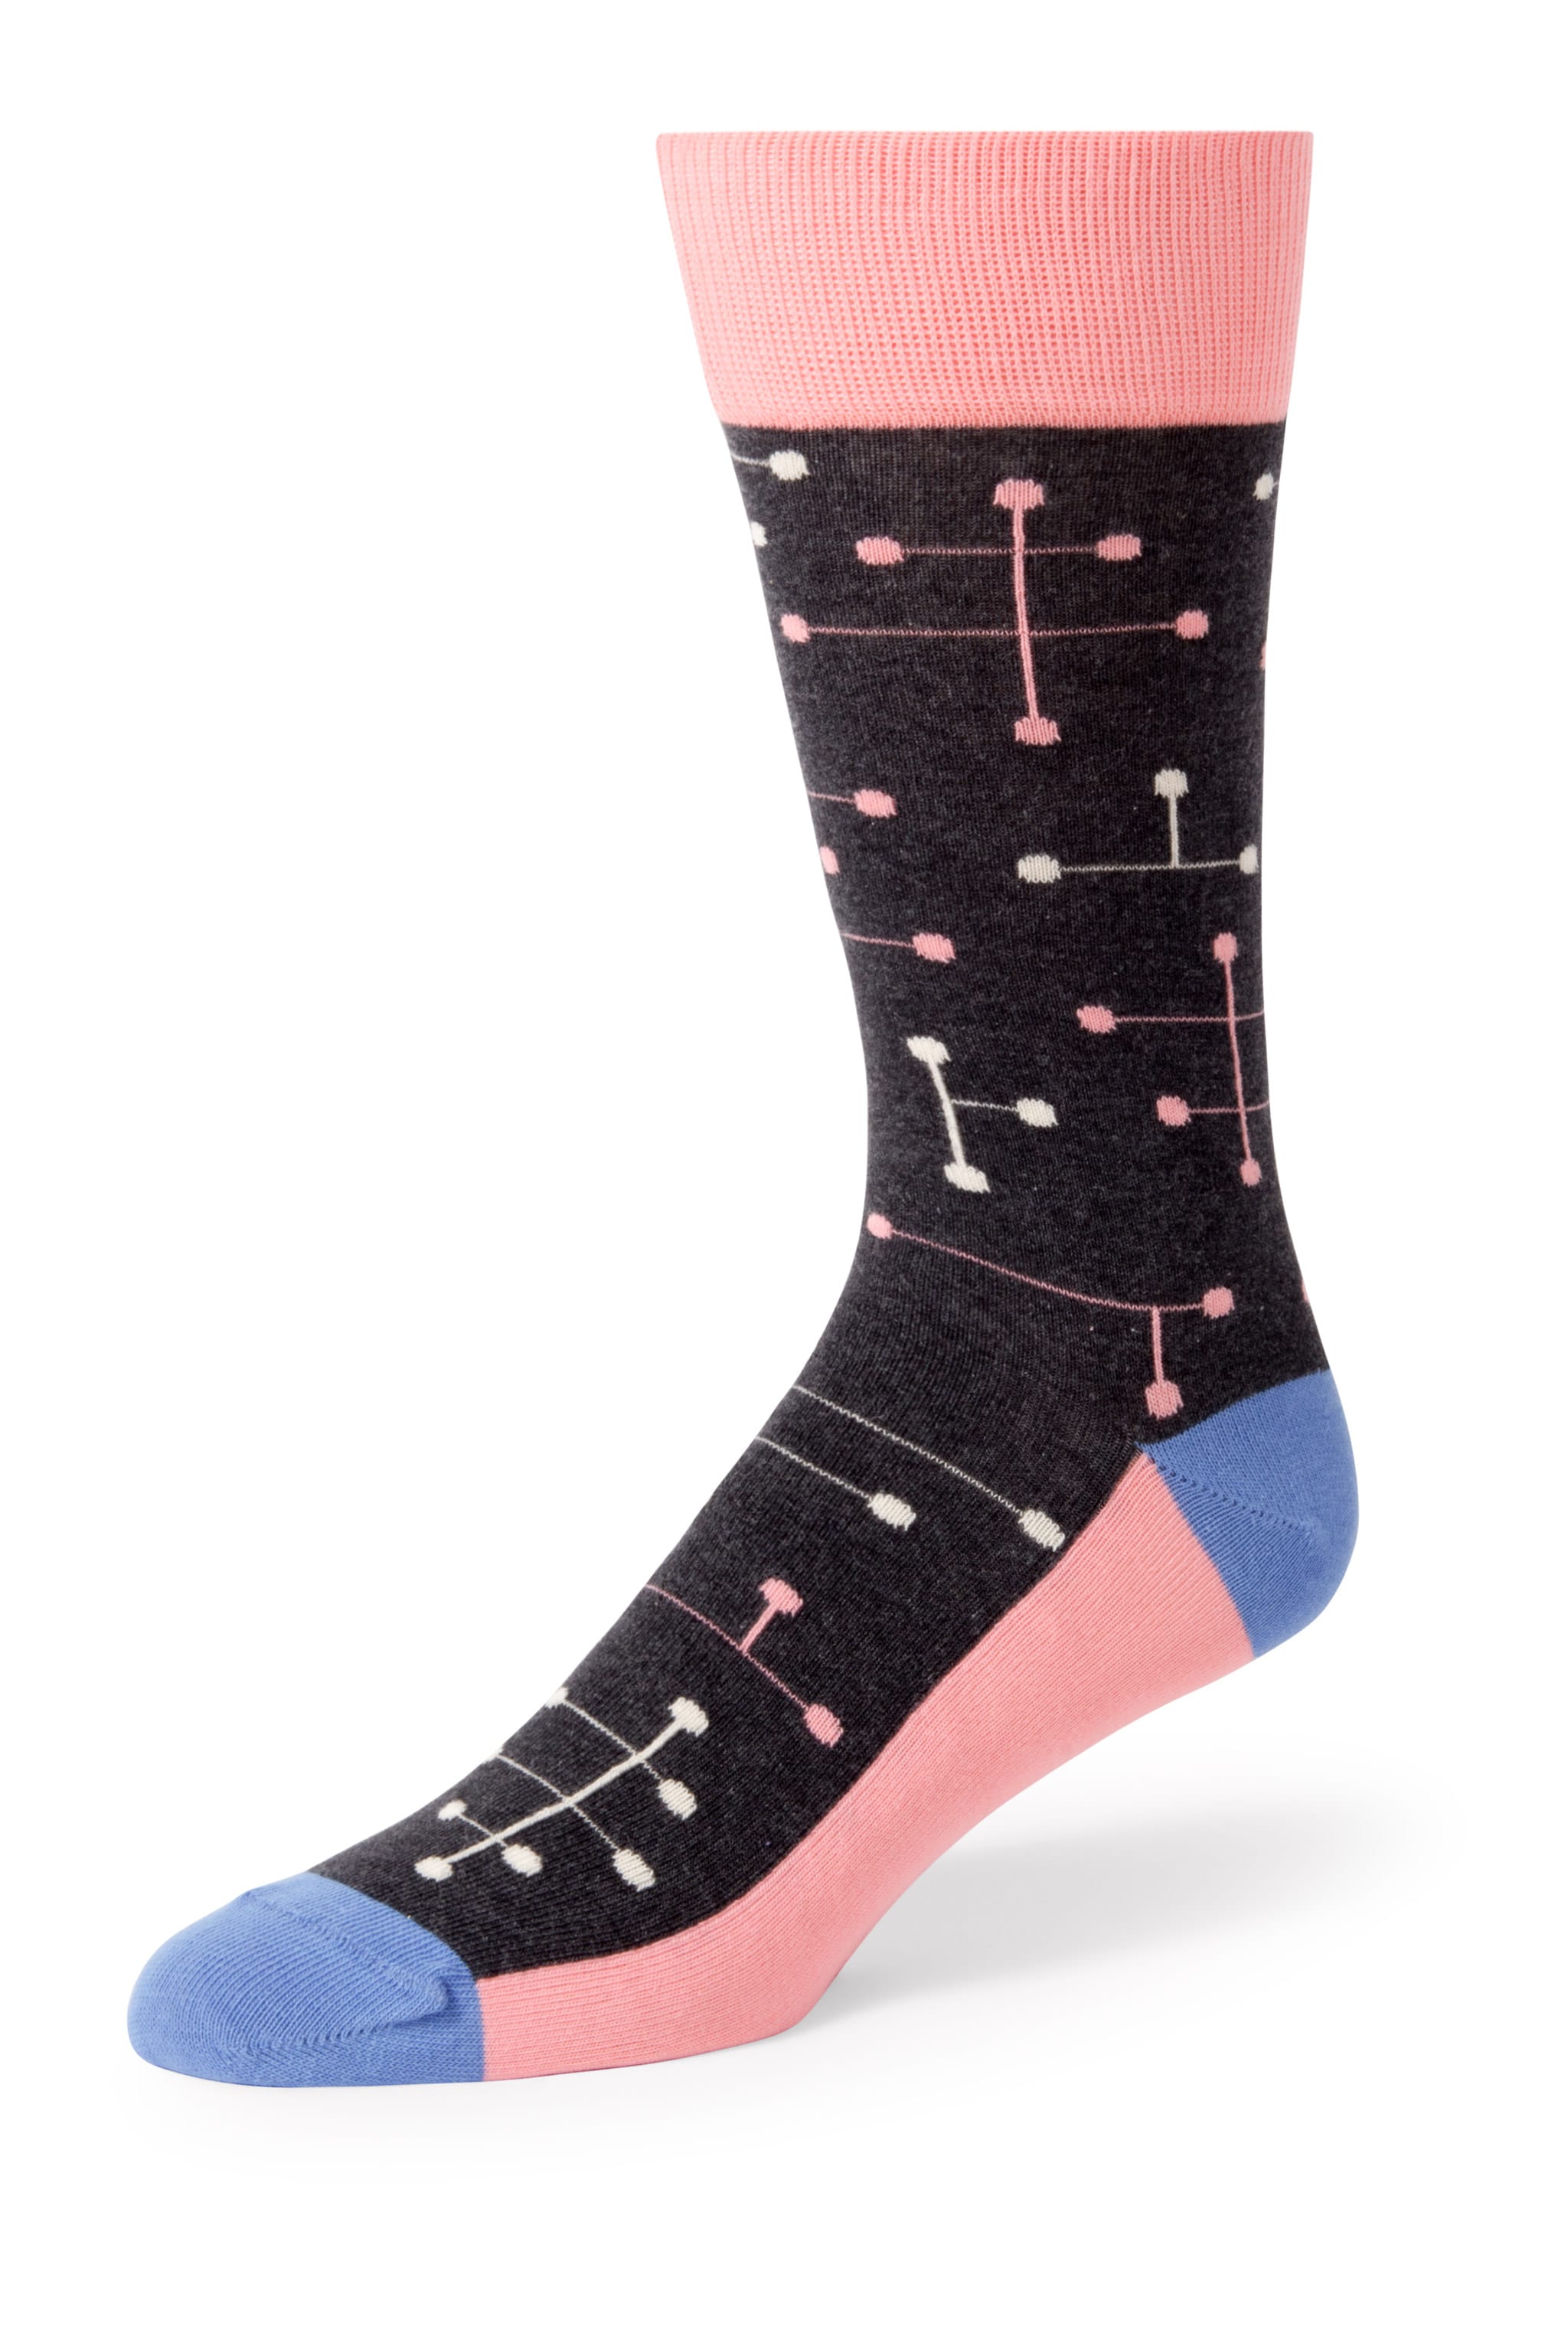 Coral Line Dot Men's Dress Socks